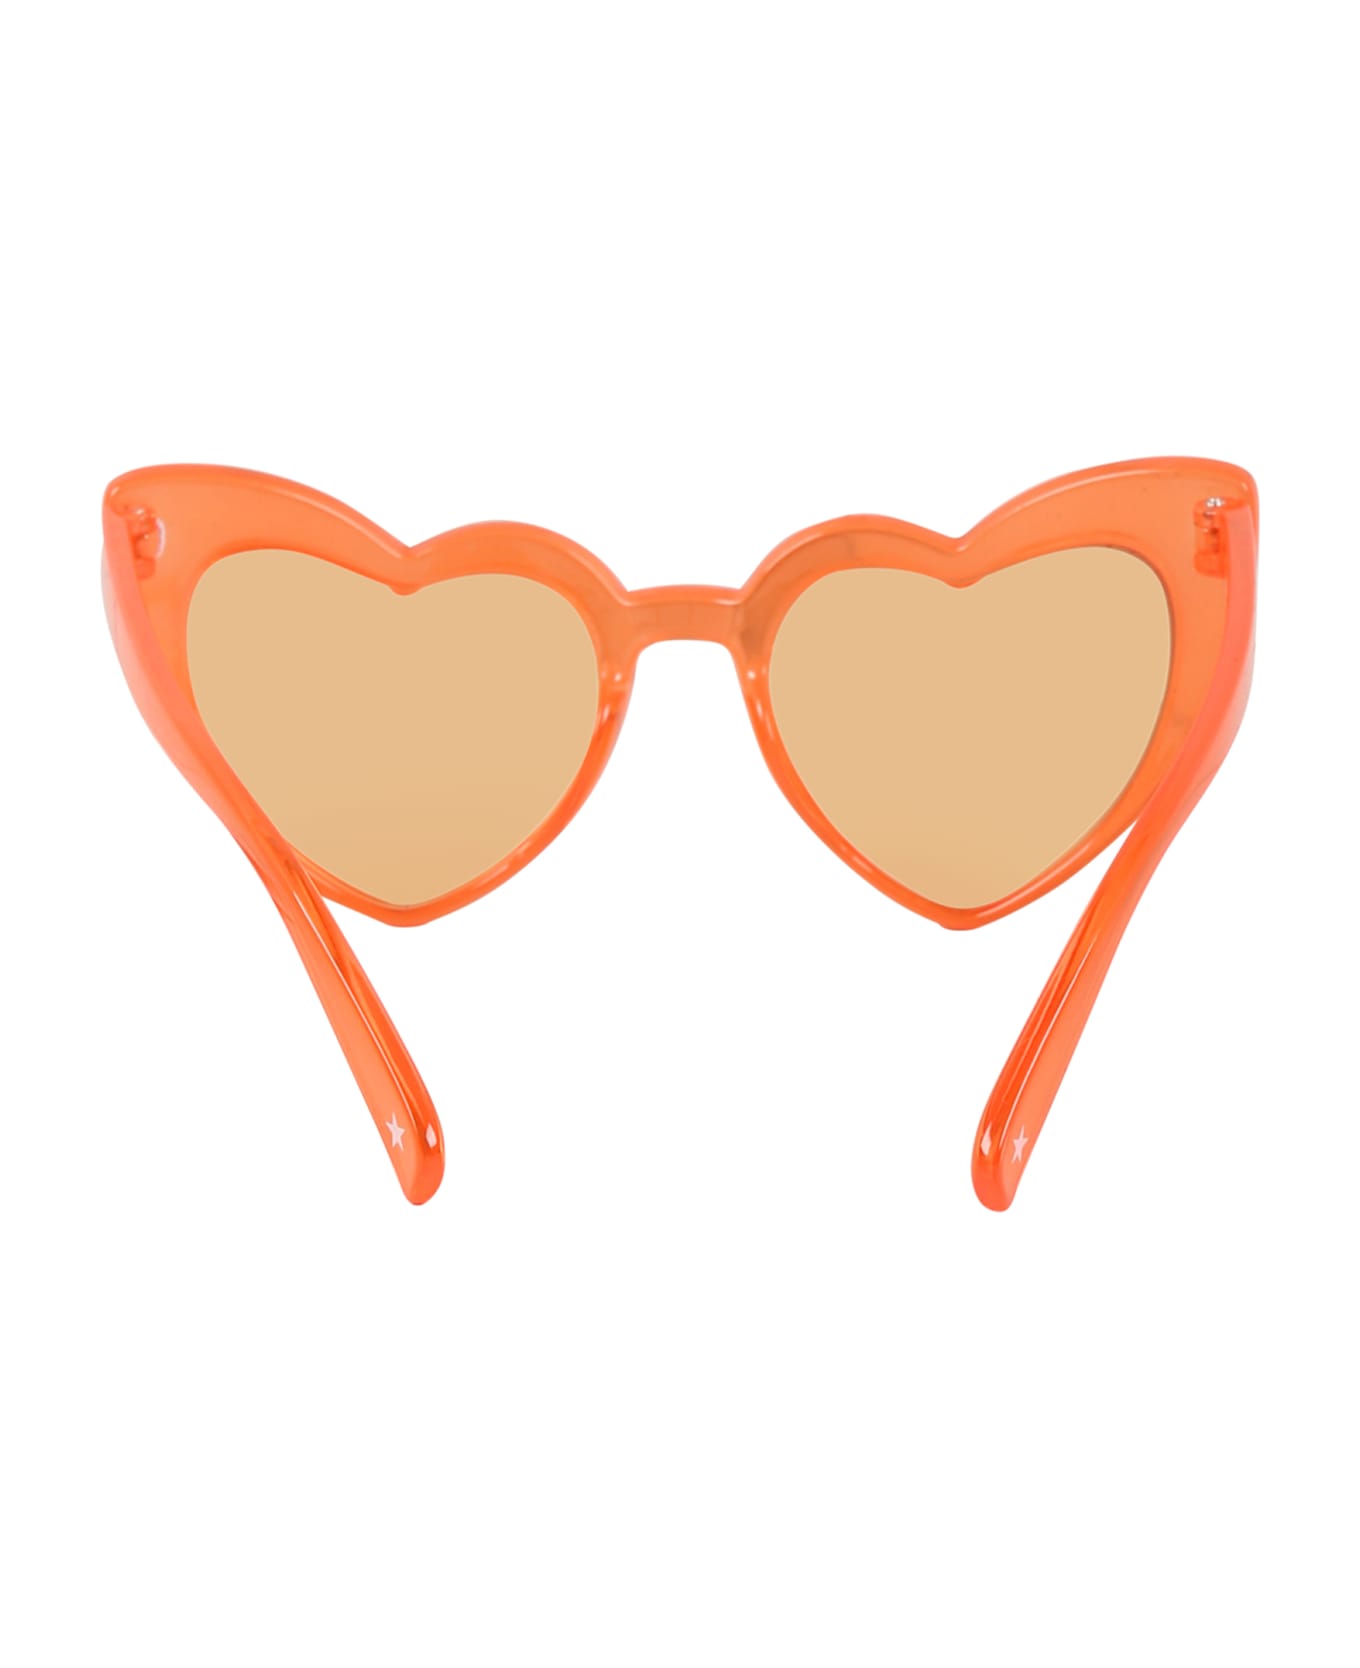 Molo Orange Sana Sunglasses For Girl - Orange